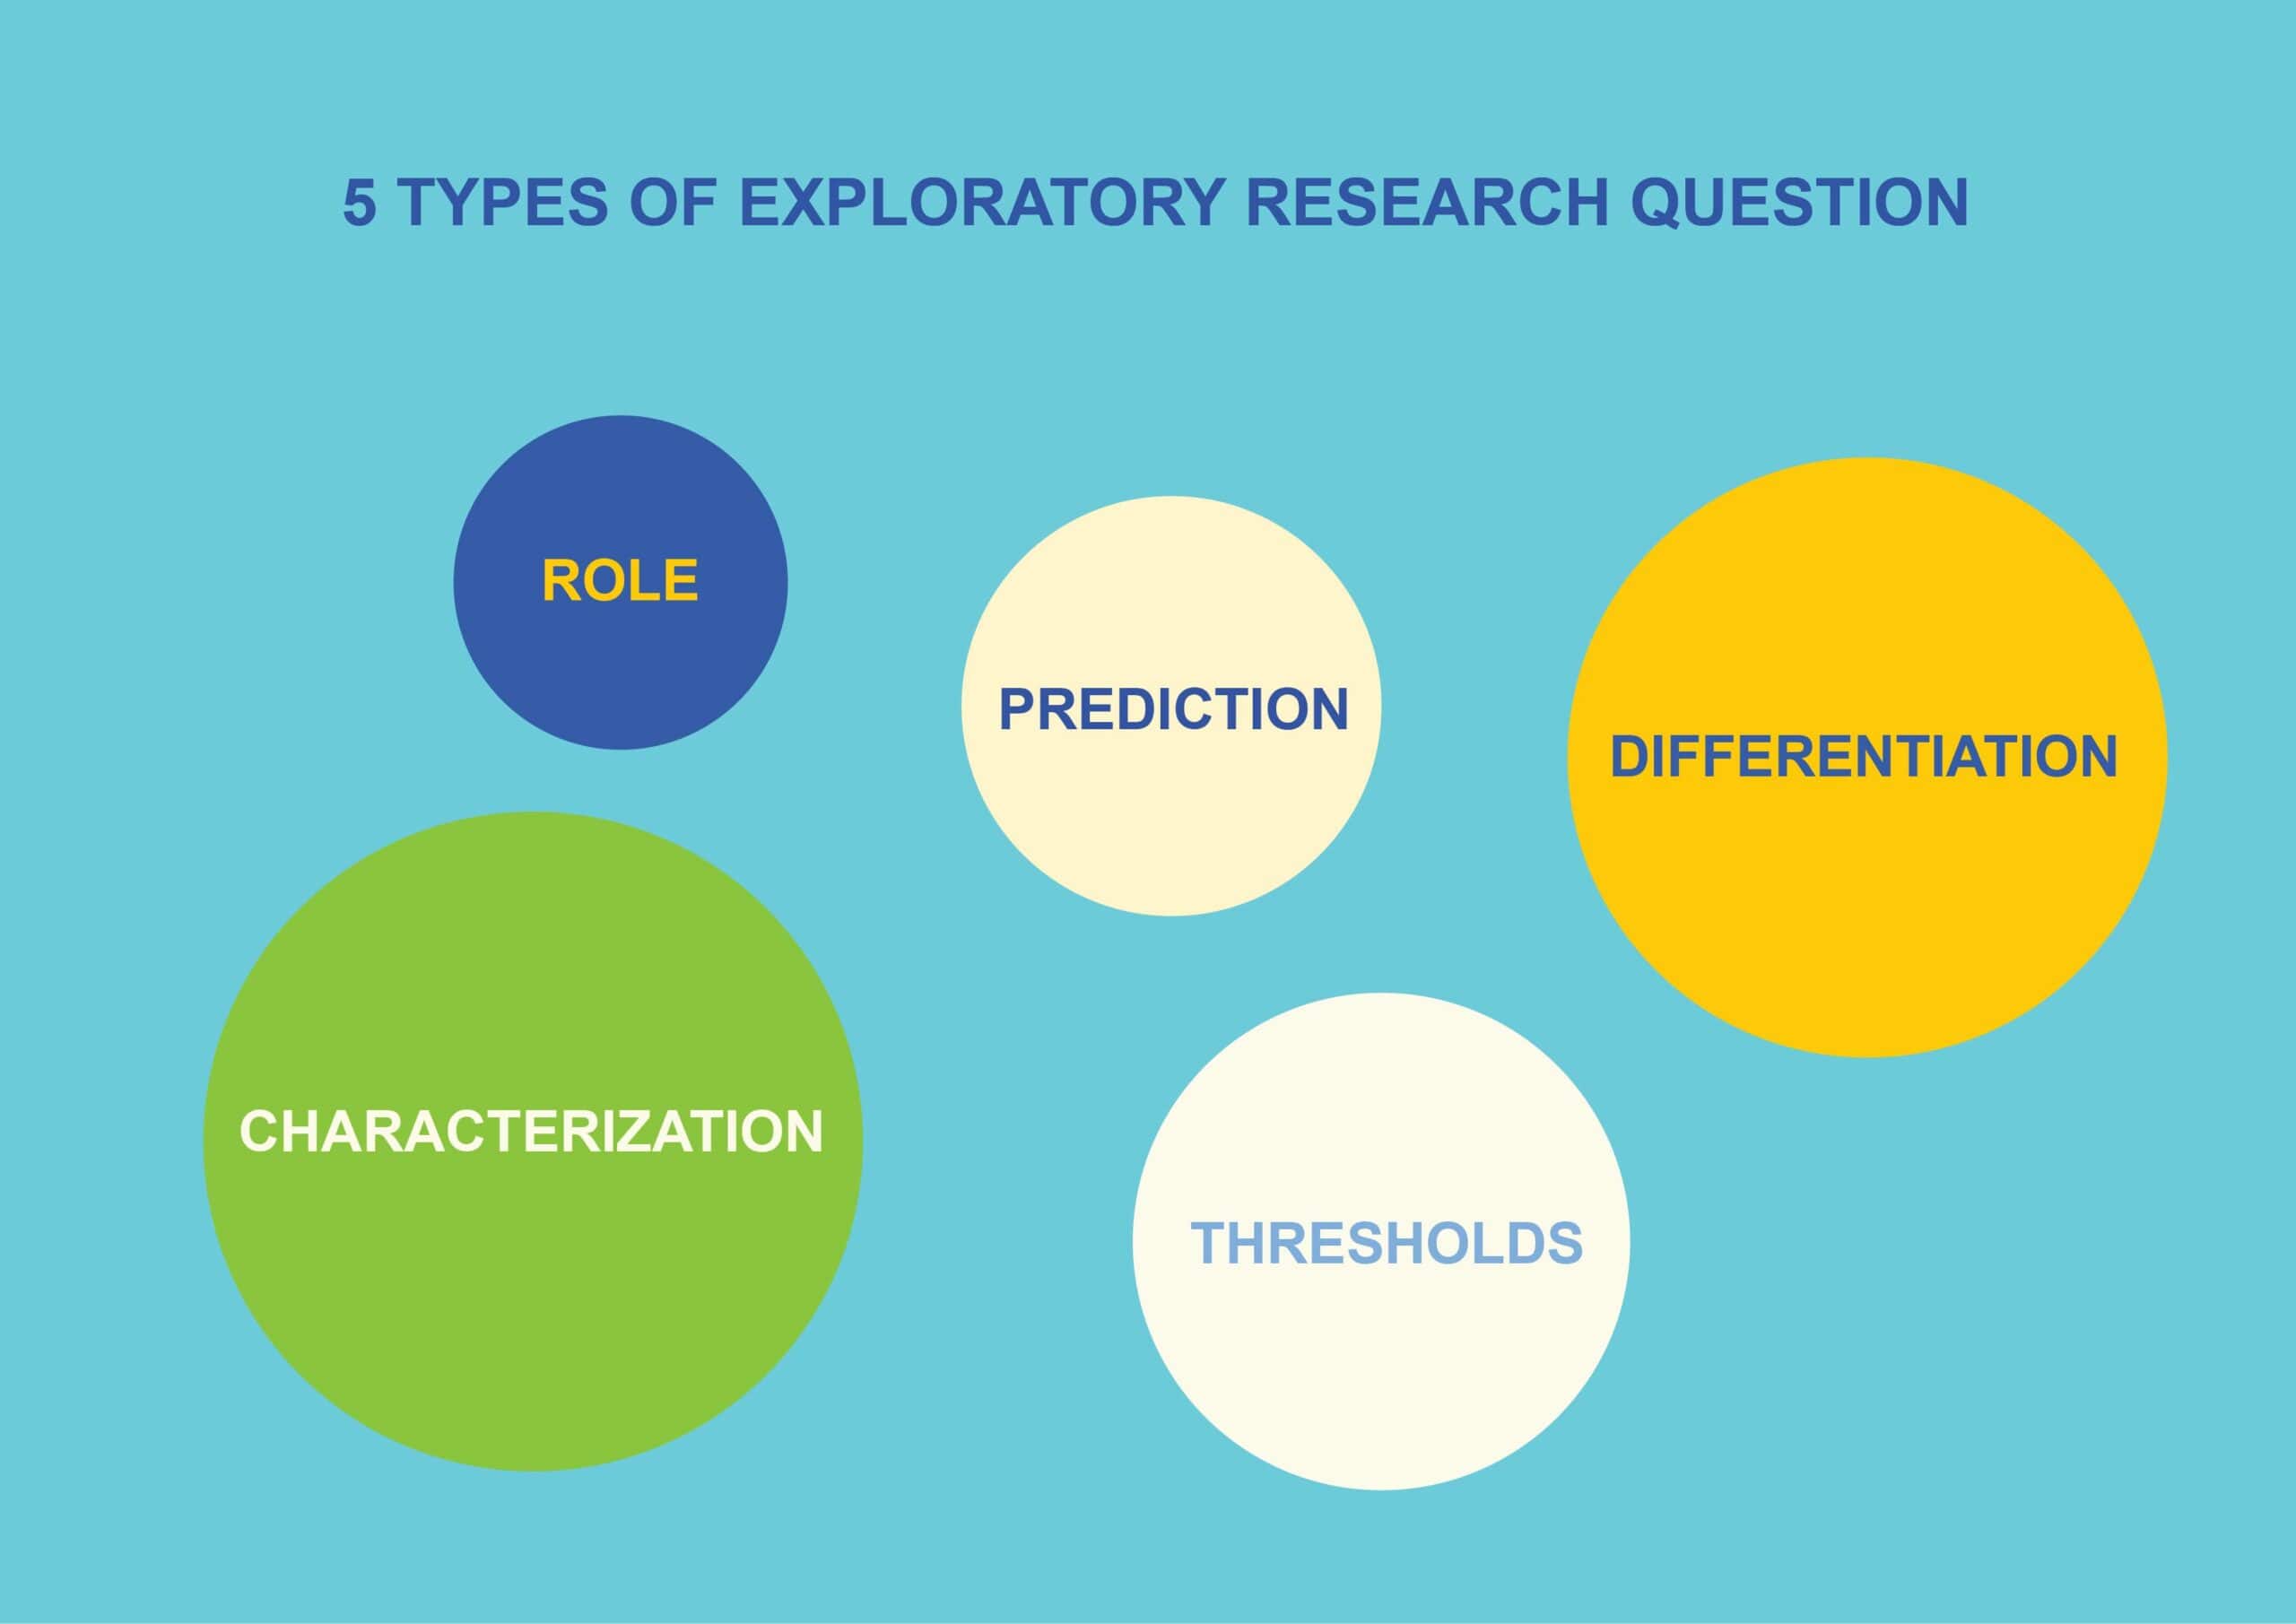 empirical research vs exploratory research